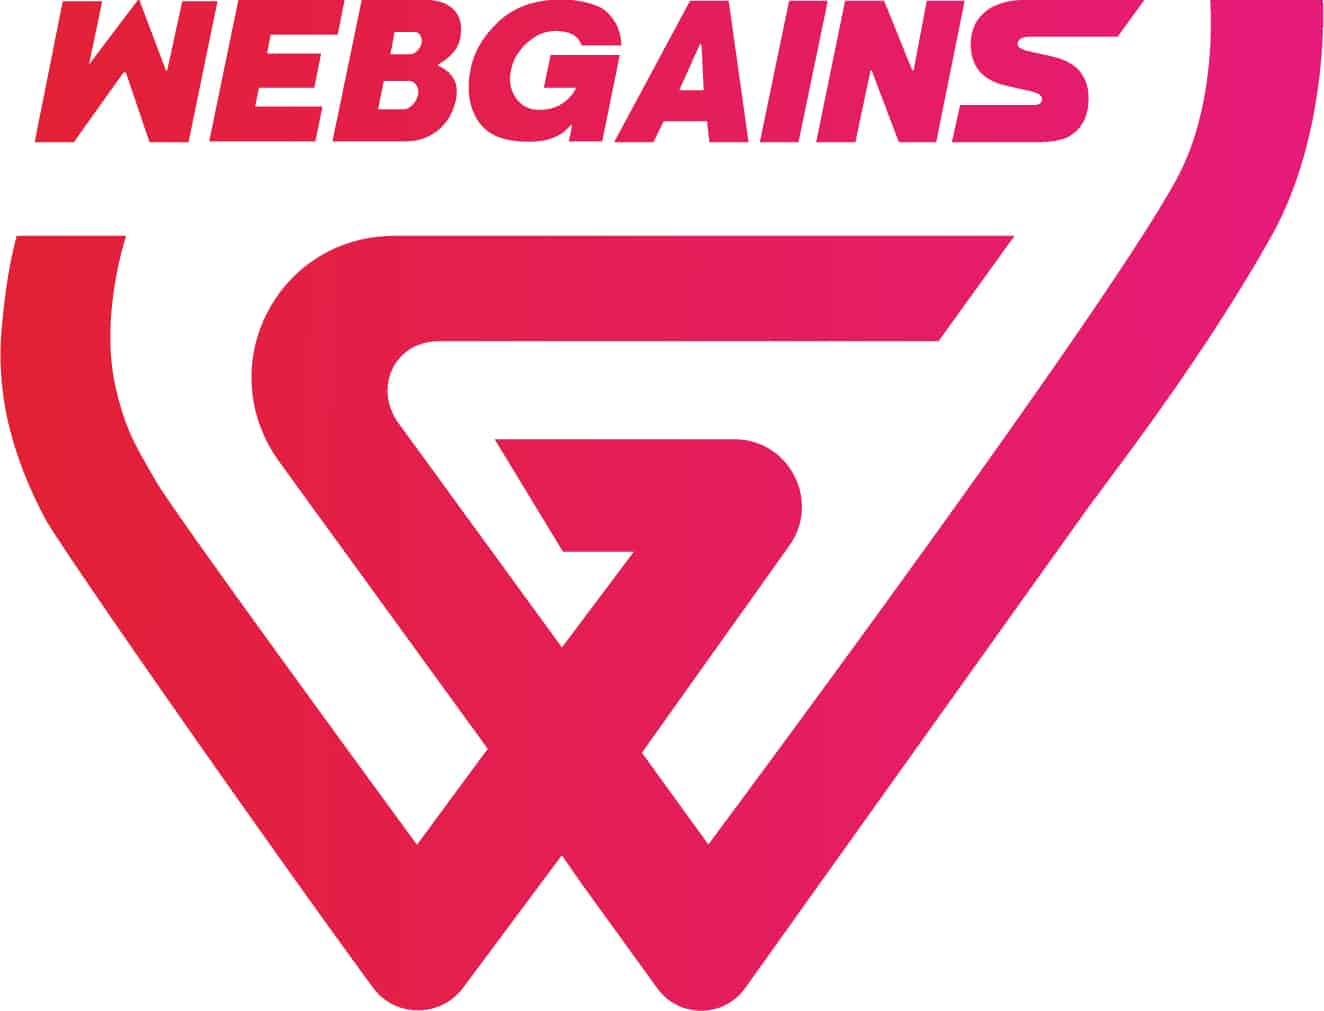 Webgains Ltd